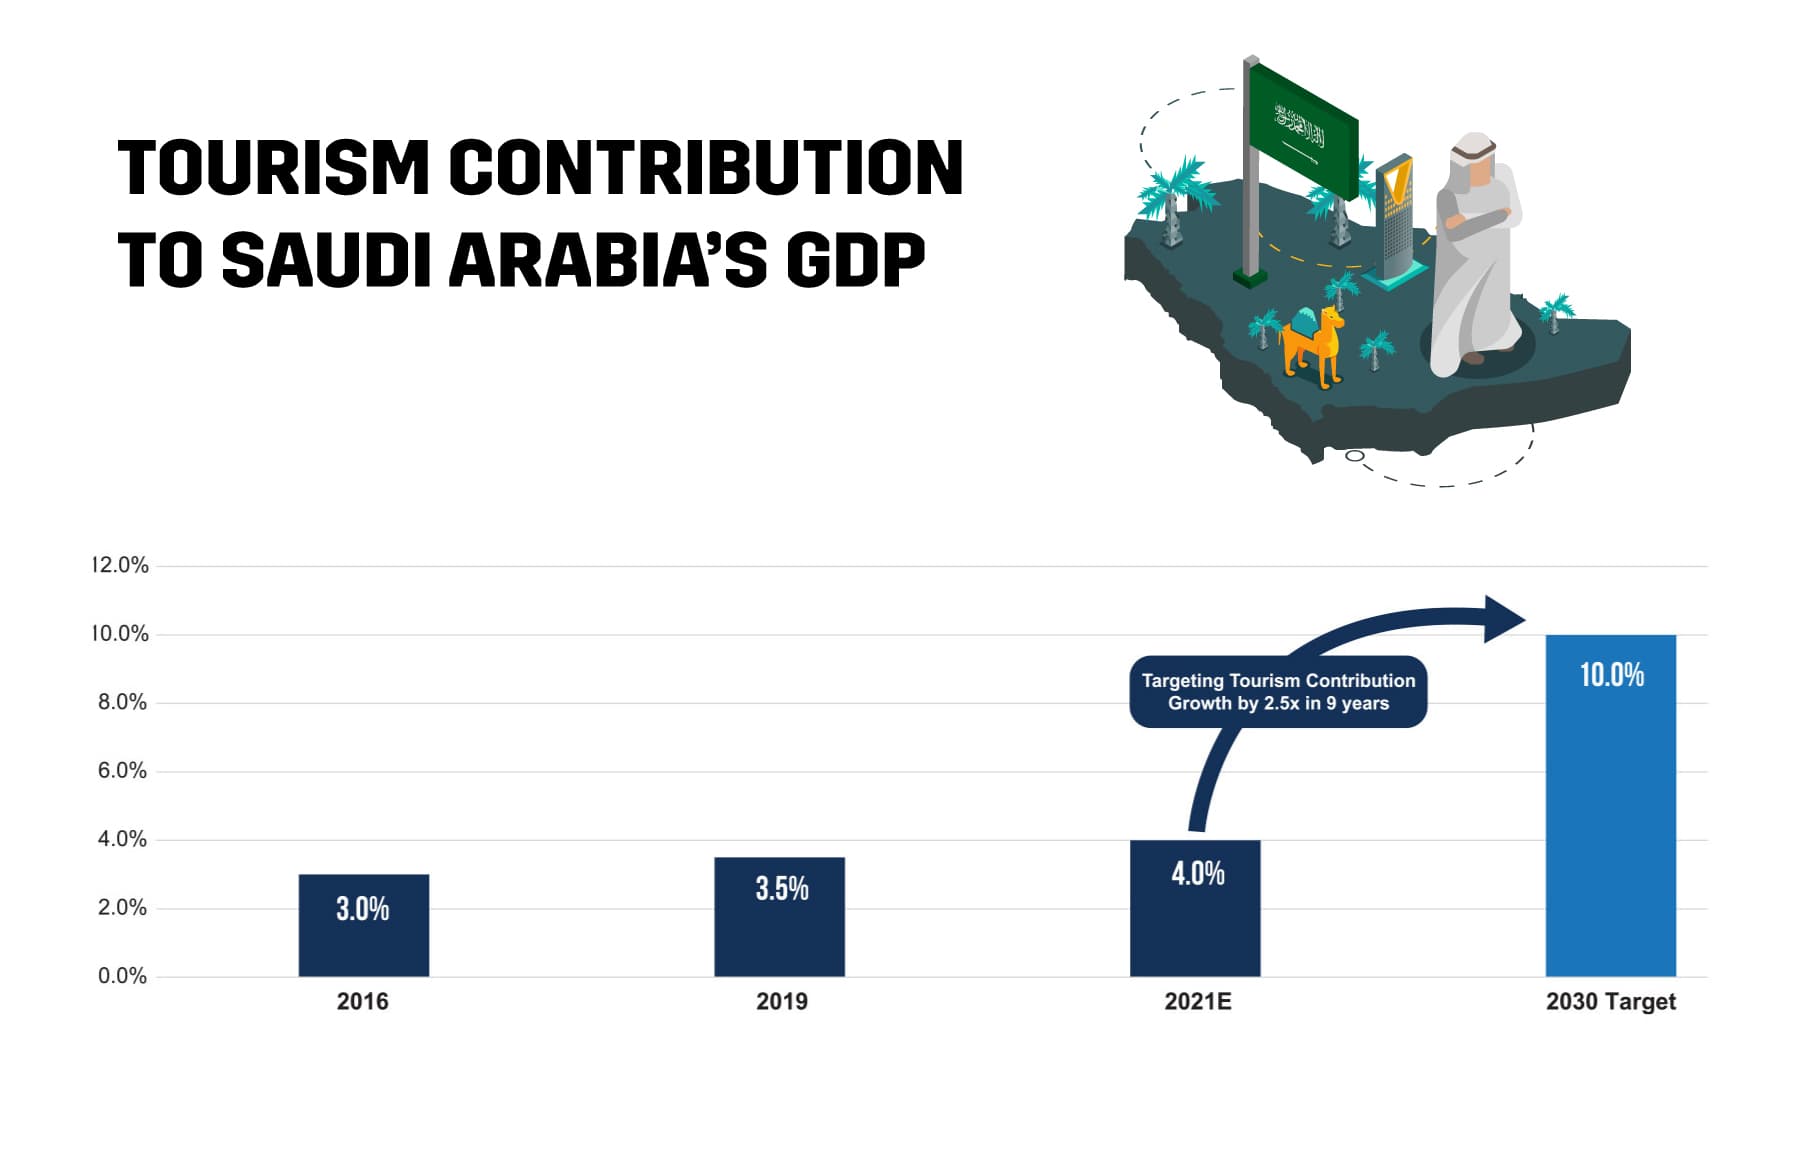 Tourism Contribution to Kingdom of Saudi Arabia's GDP – 2016 vs 2019 vs 2030 Target